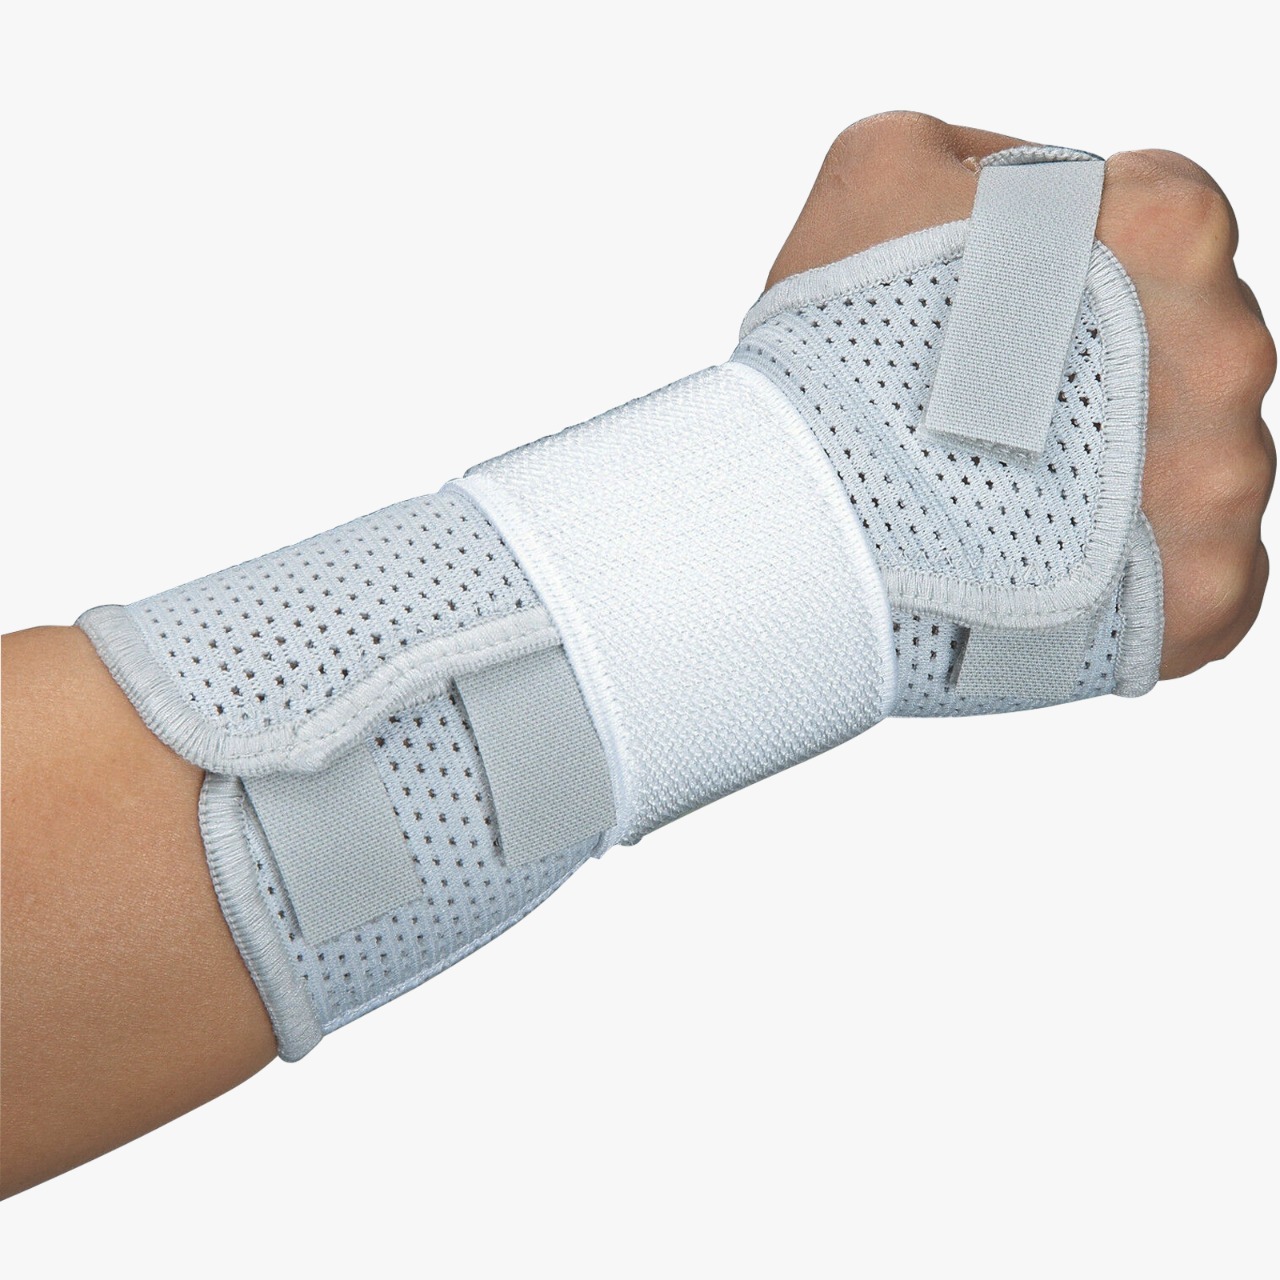 Medium Left Hand Breathable Wrist Support Brace Splint For Carpal Tunnel, Arthritis Sprain Strain